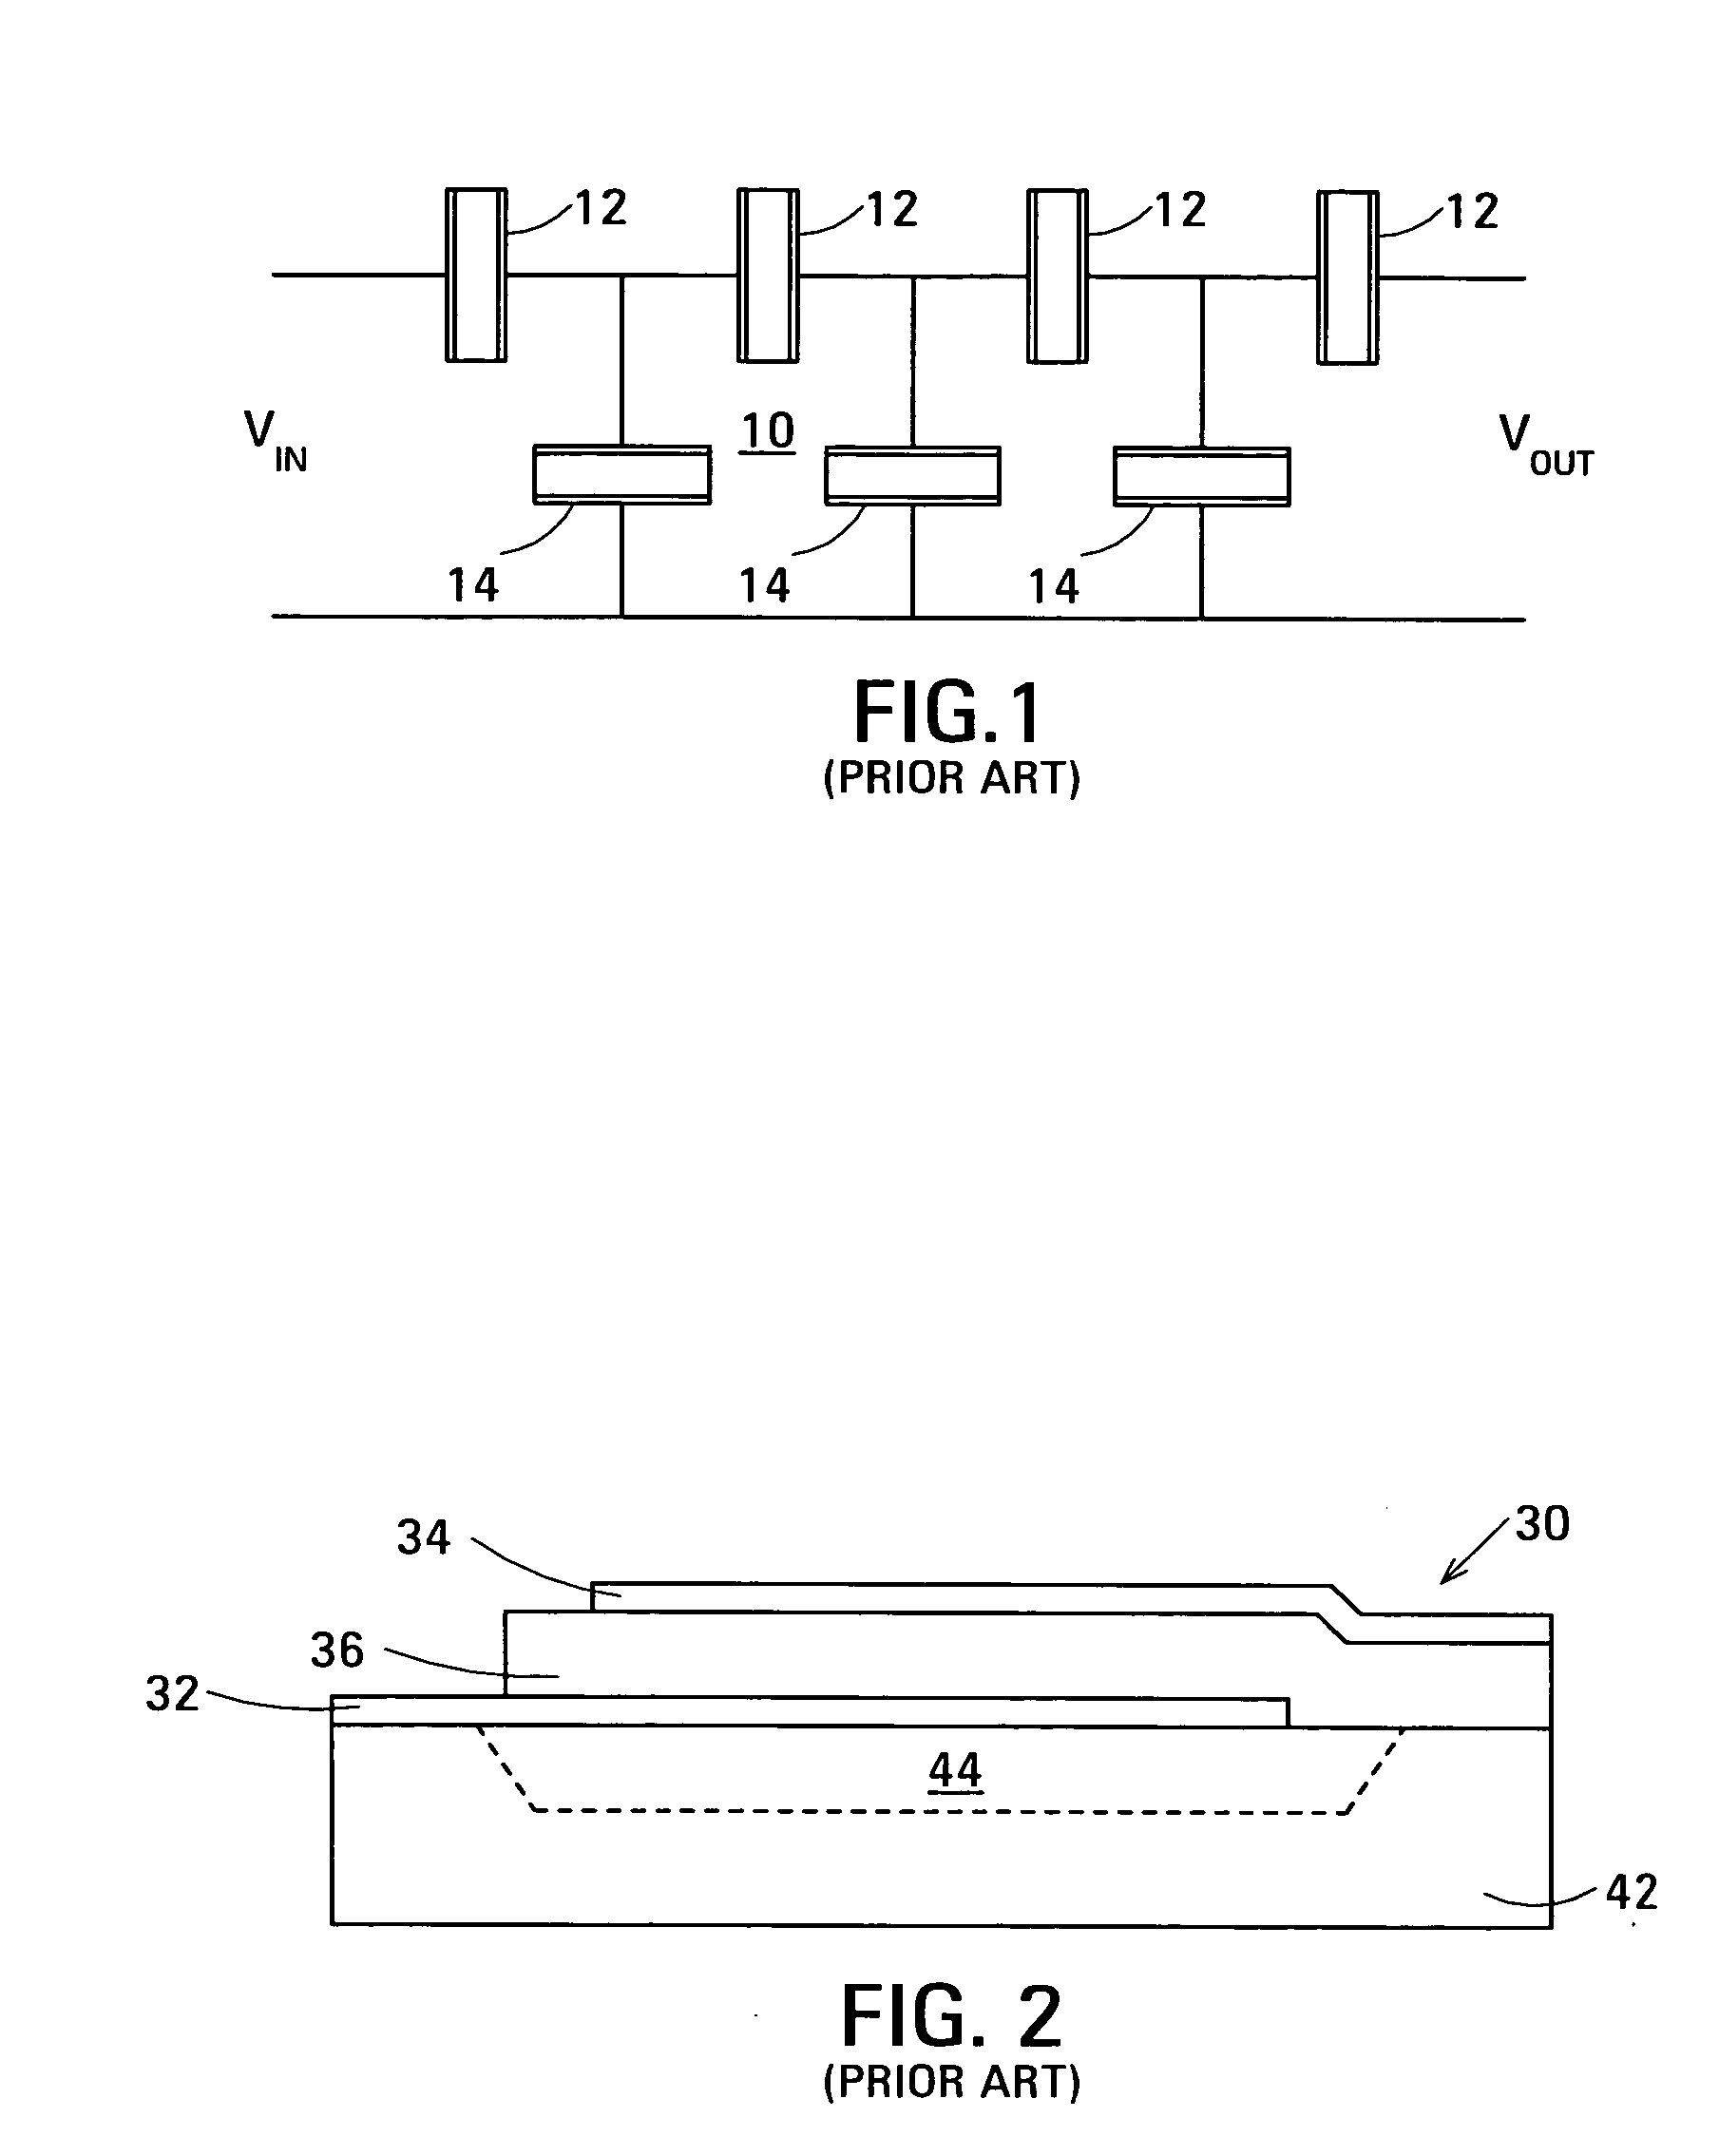 Temperature-compensated film bulk acoustic resonator (FBAR) devices